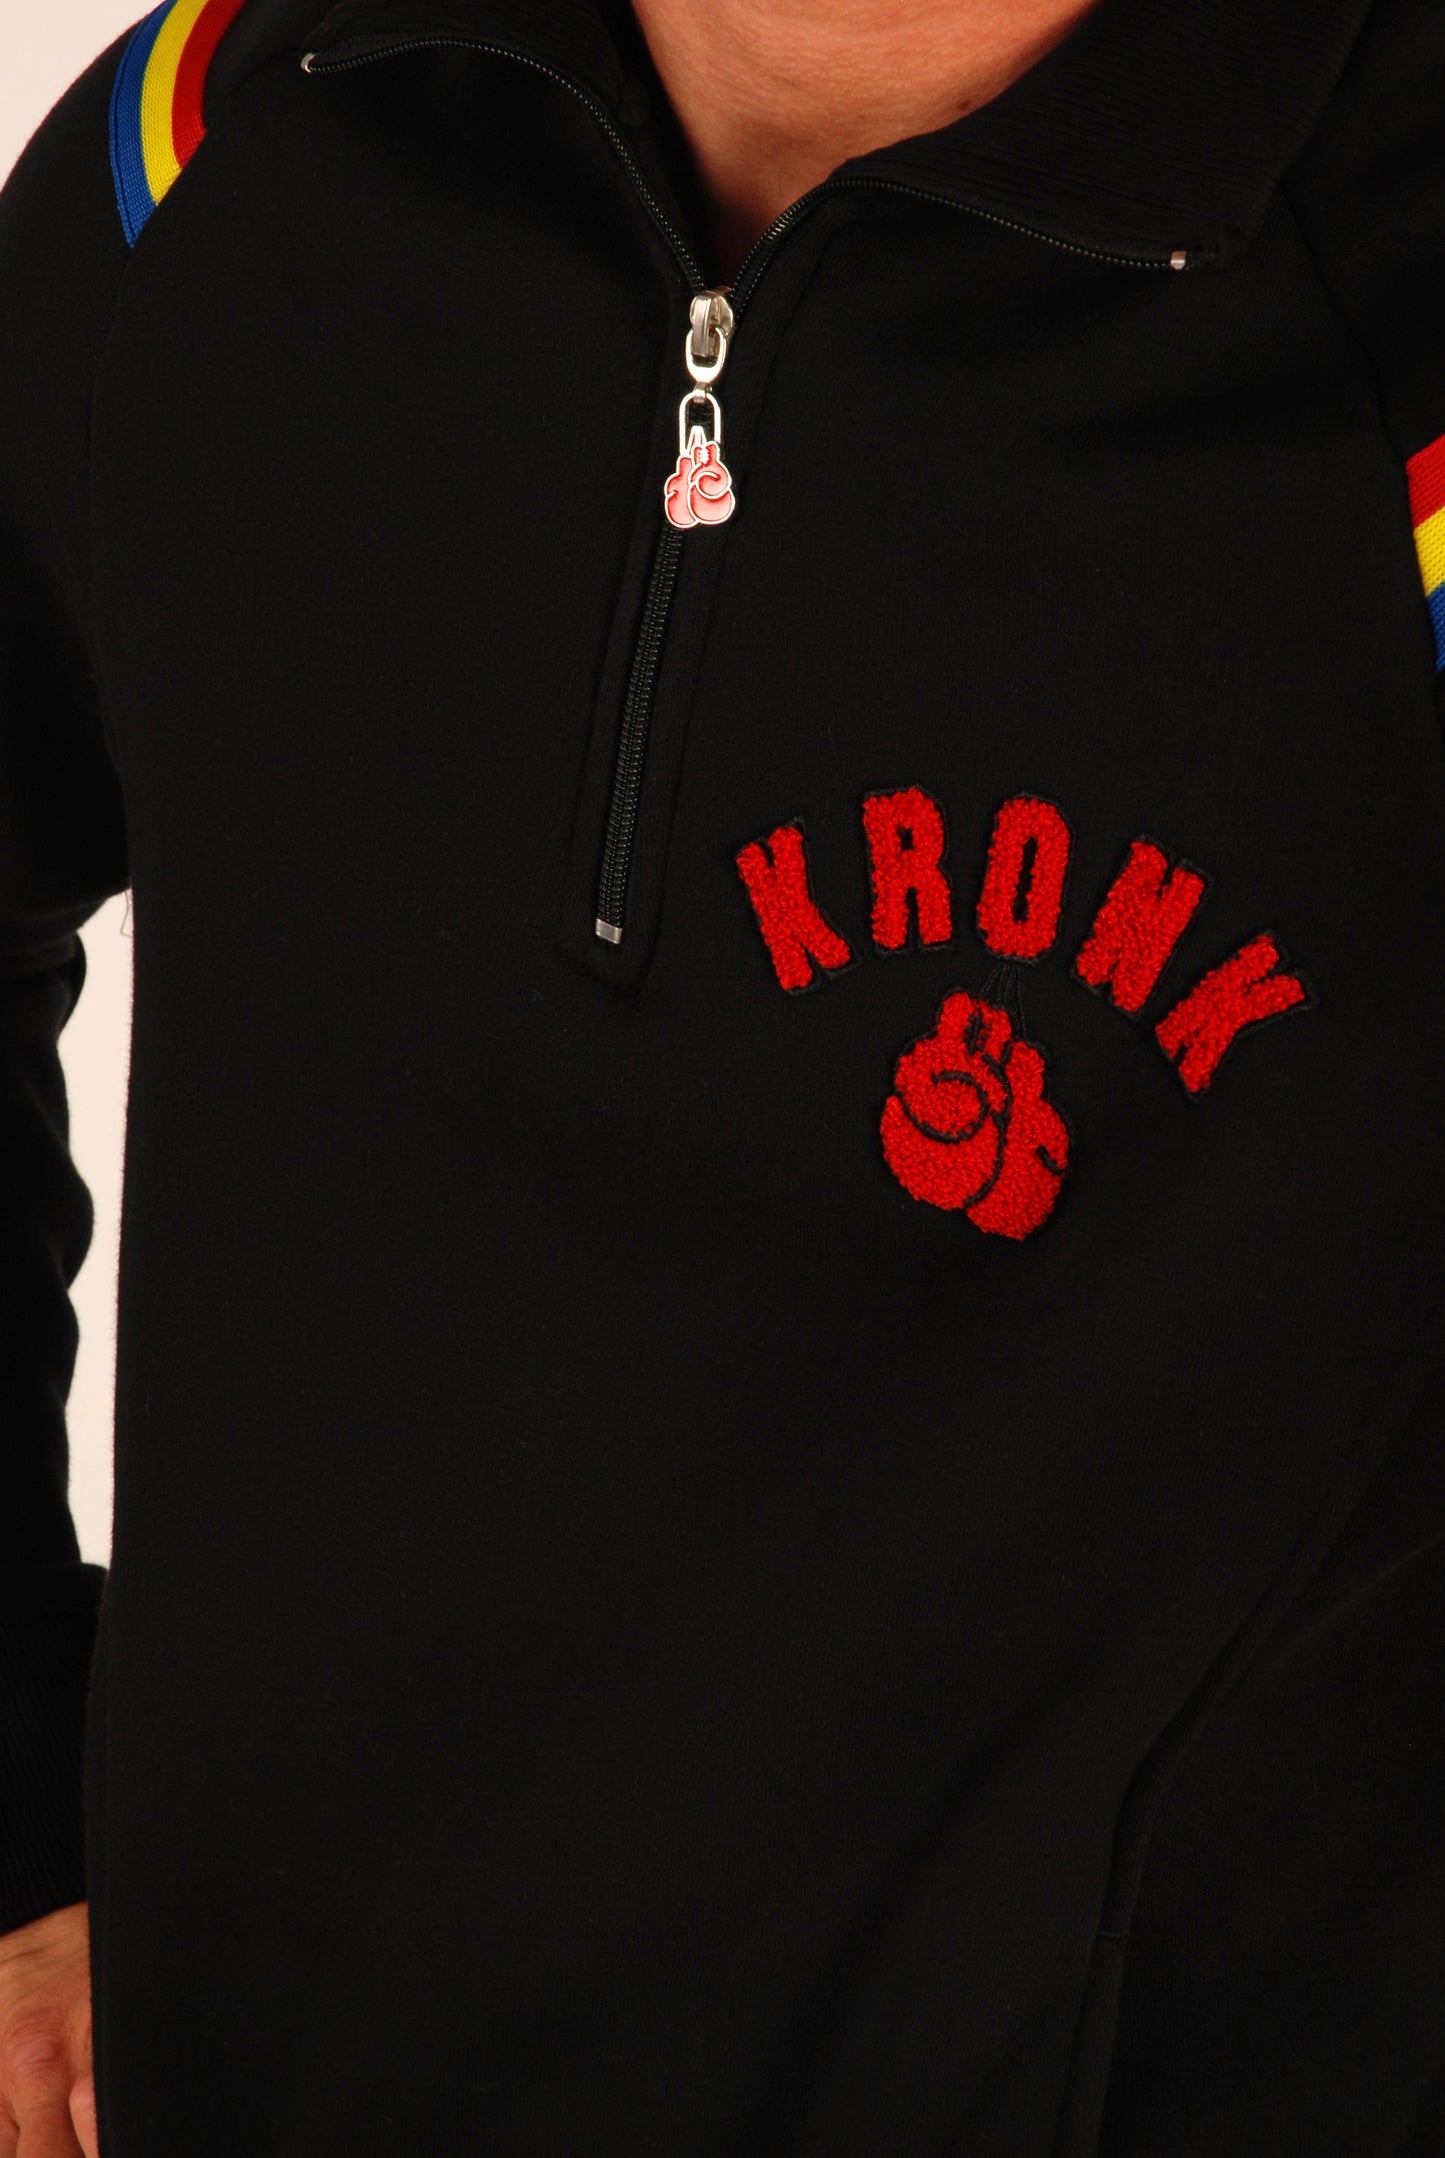 KRONK One Colour Gloves Quarter Zip Track Top Sweatshirt Black